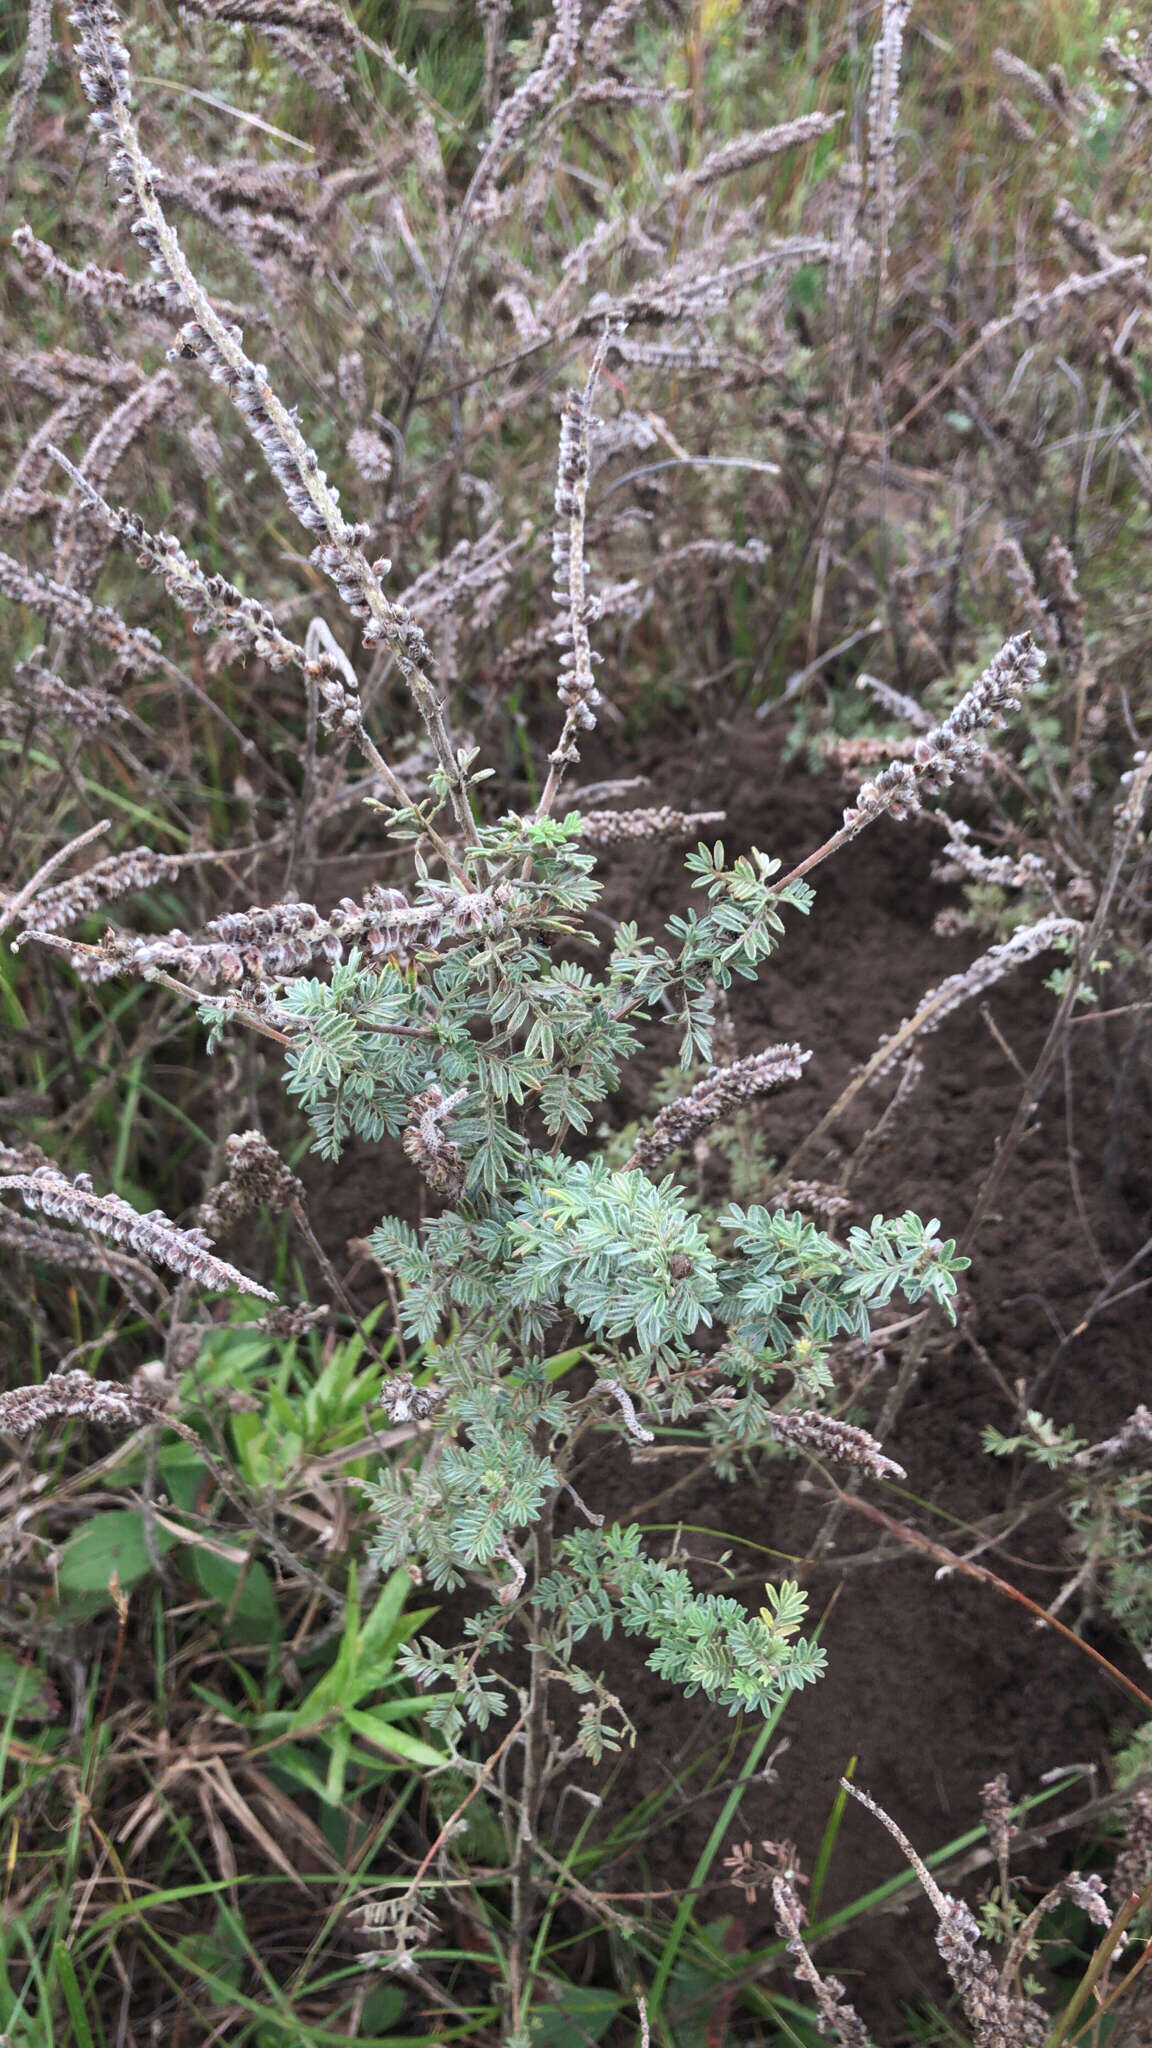 Image of silky prairie clover